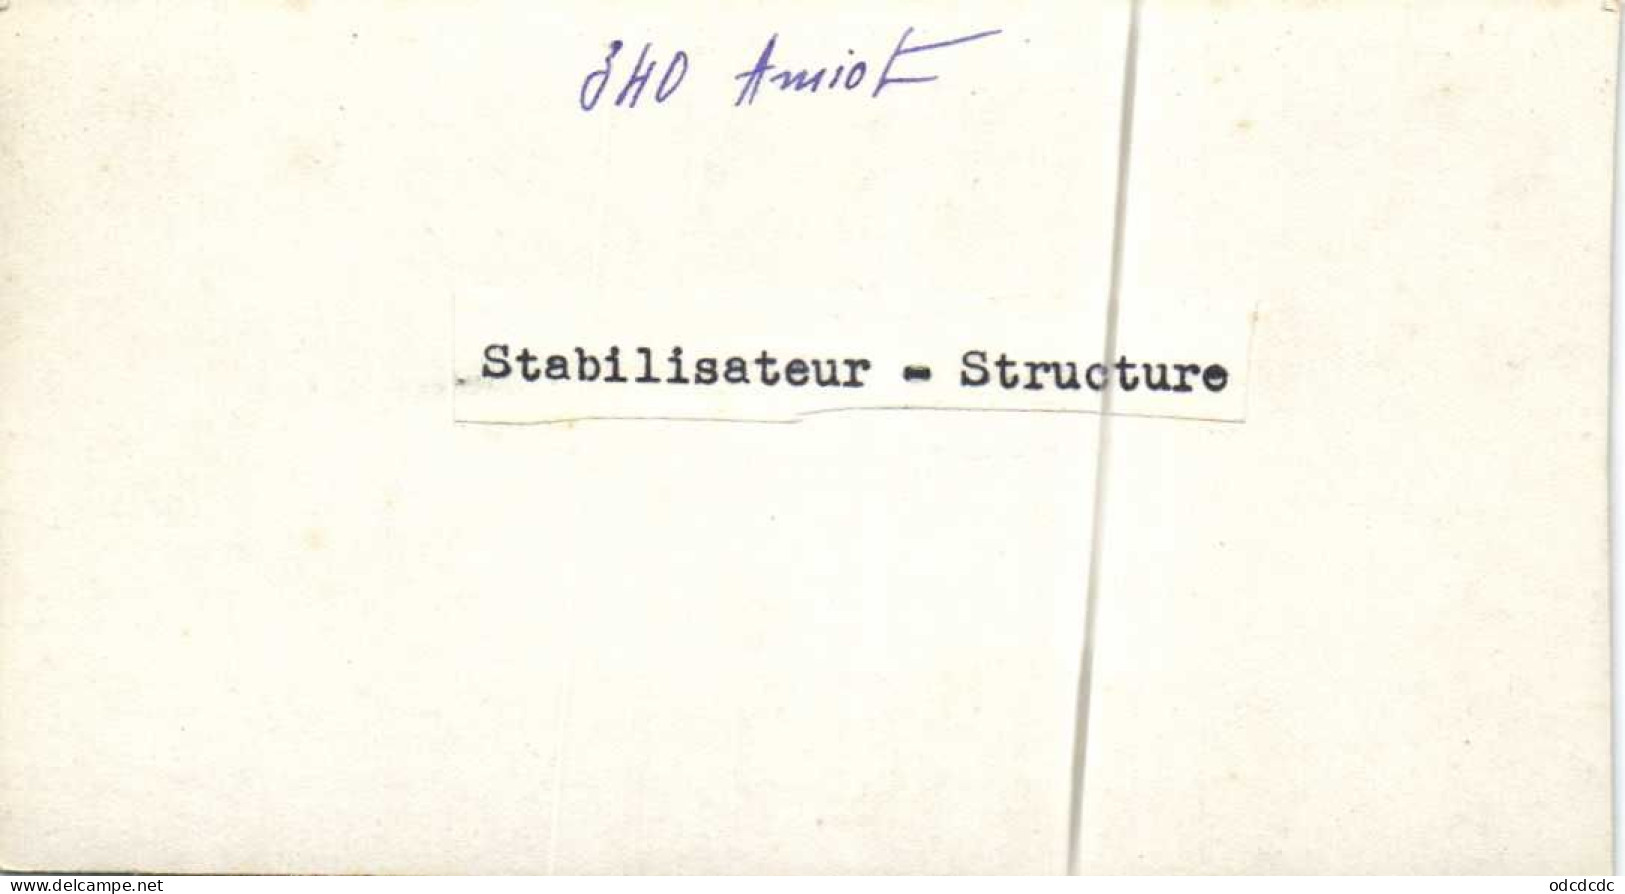 Photo 340 Amiot Stabilisateur Structure RV - 1919-1938: Between Wars